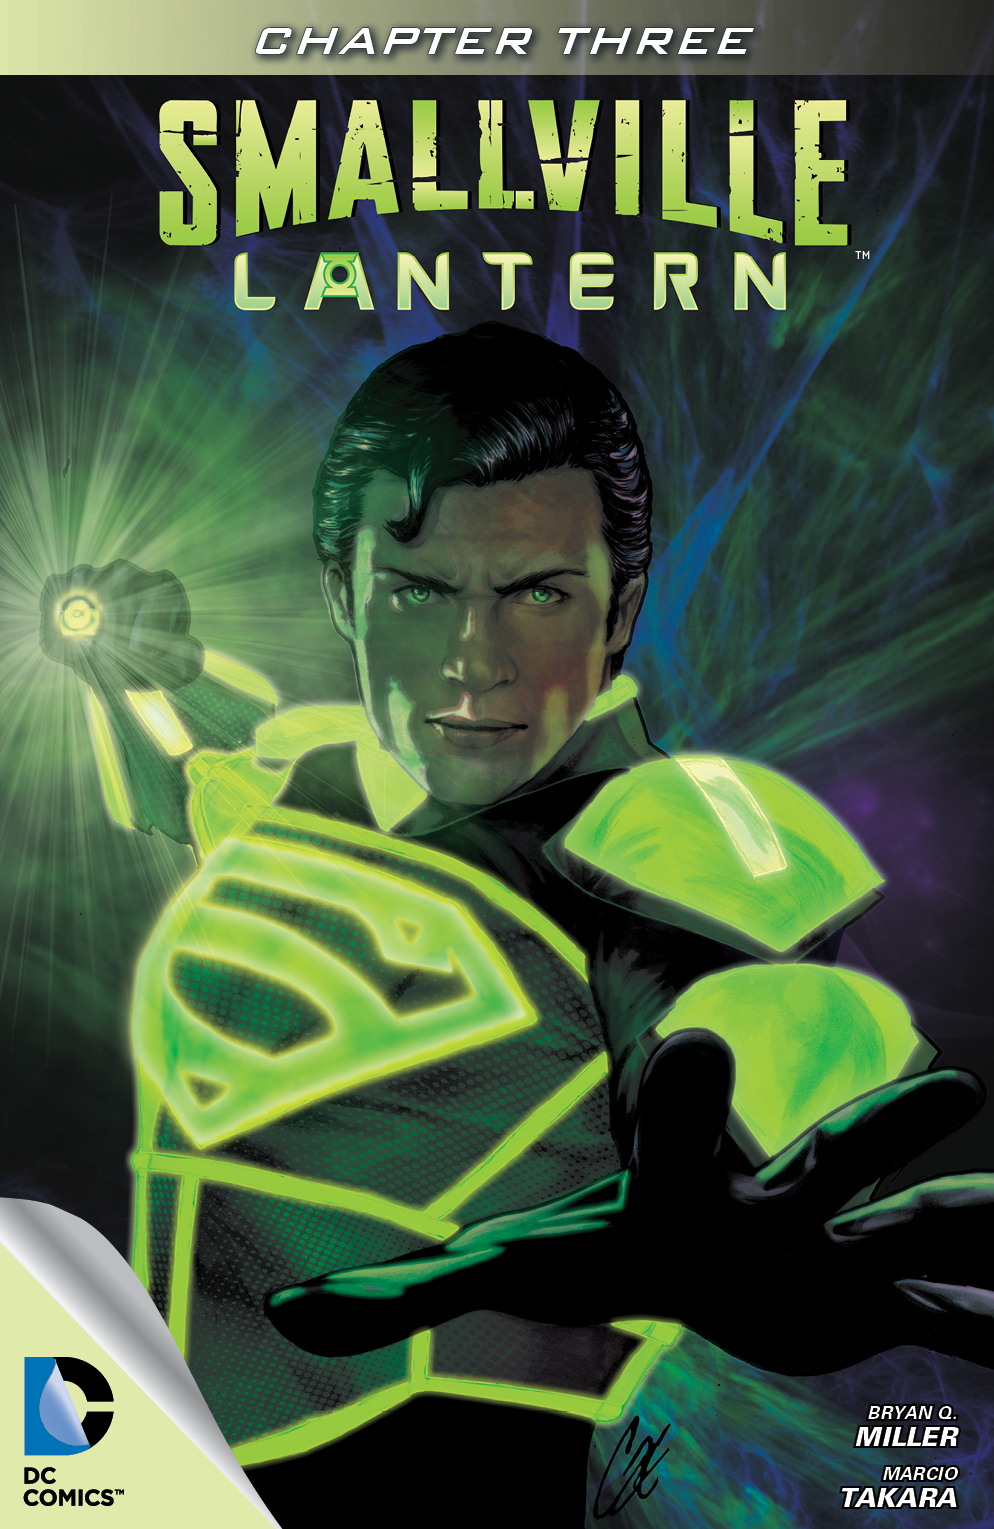 Smallville Season 11: Lantern #3 preview images